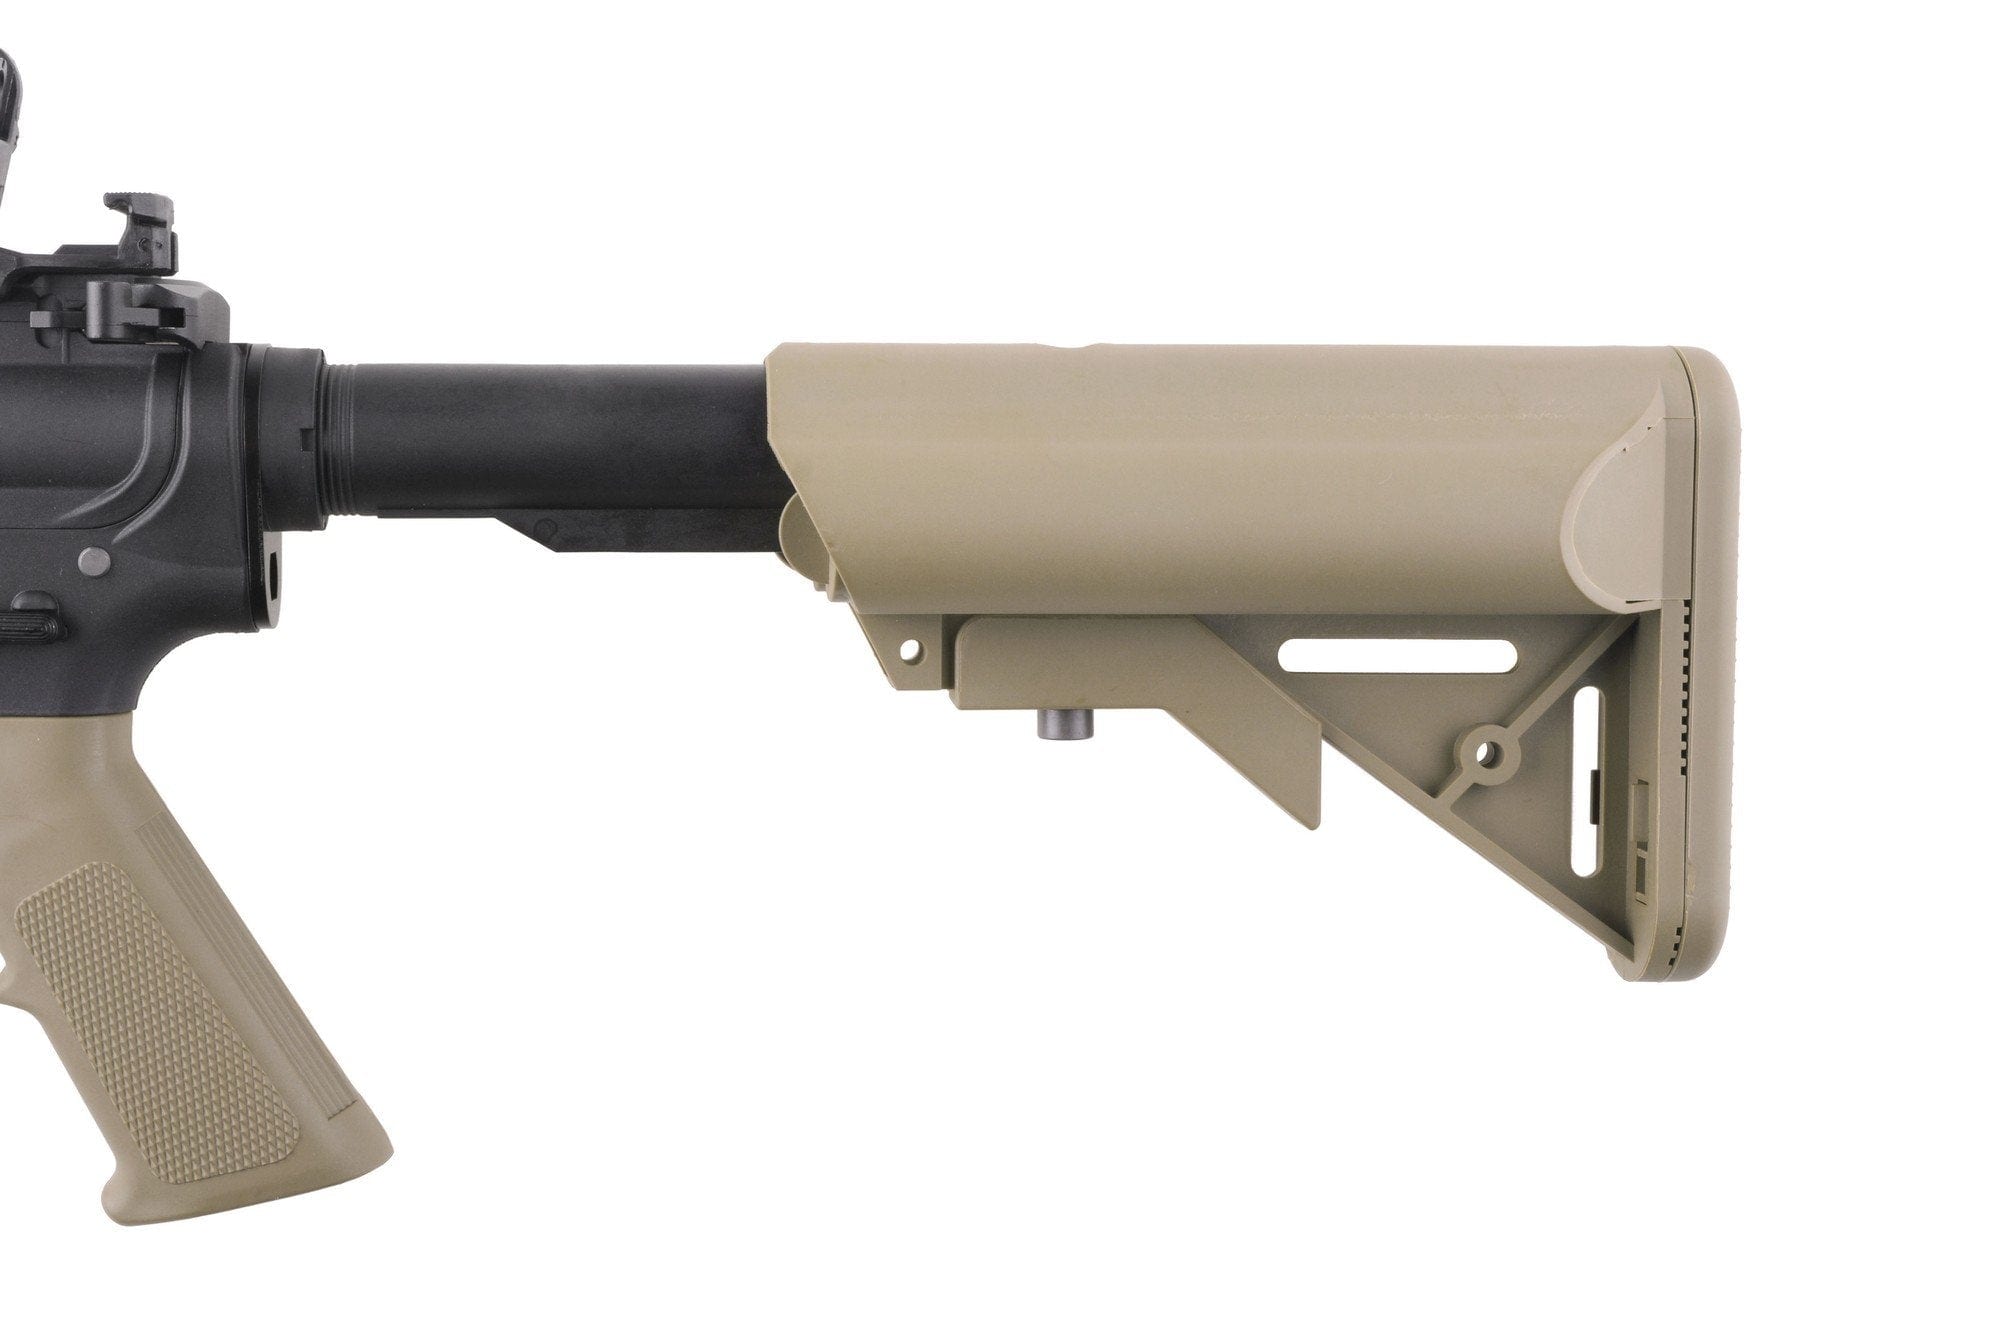 SA-C05 CORE Specna Arms - Half-Tan